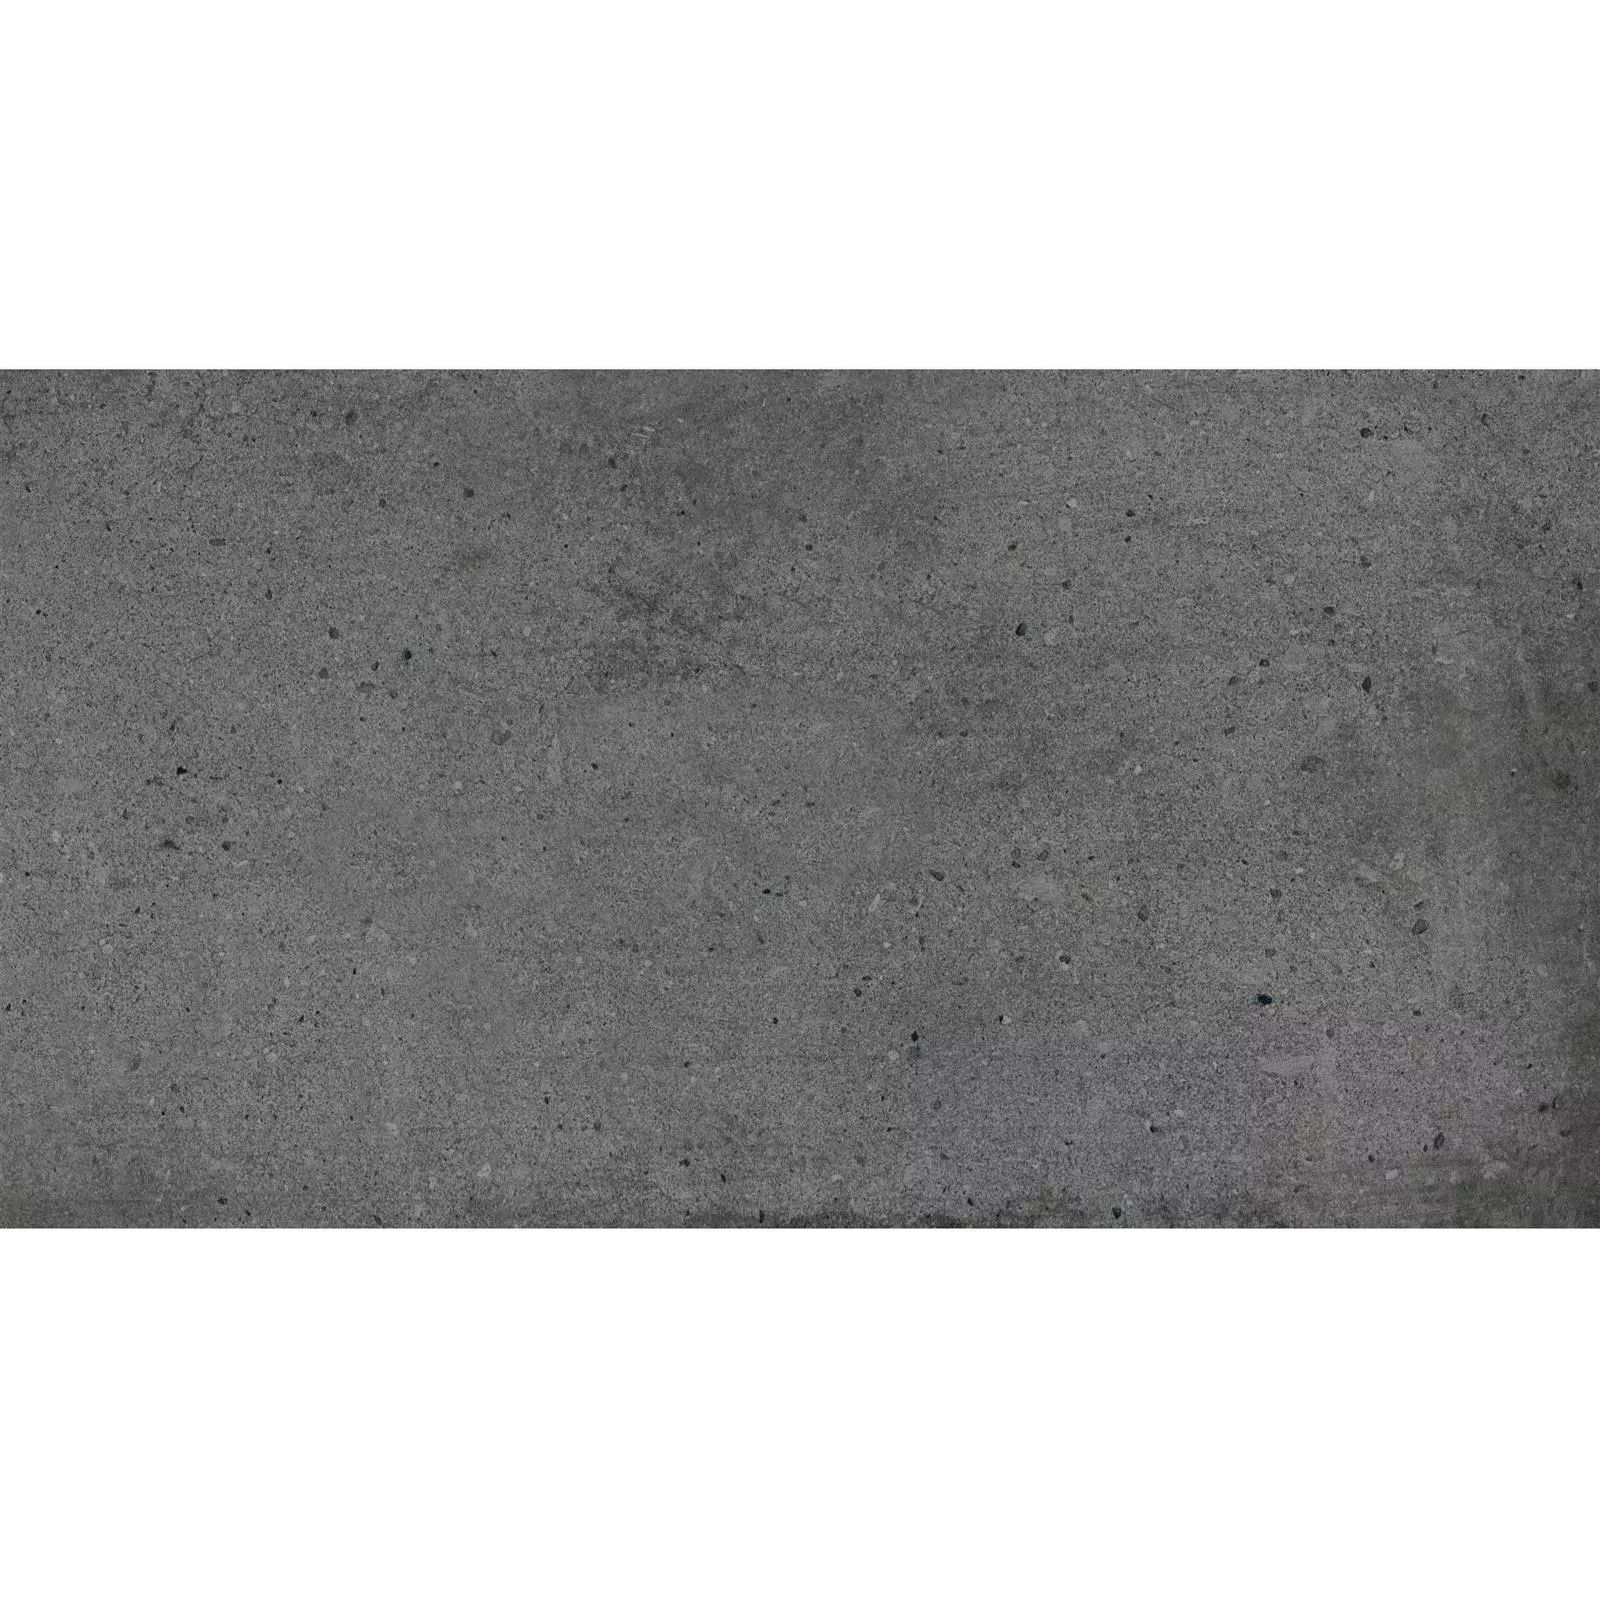 Gresie Freeland Aspect De Piatră R10/B Antracit 30x60cm